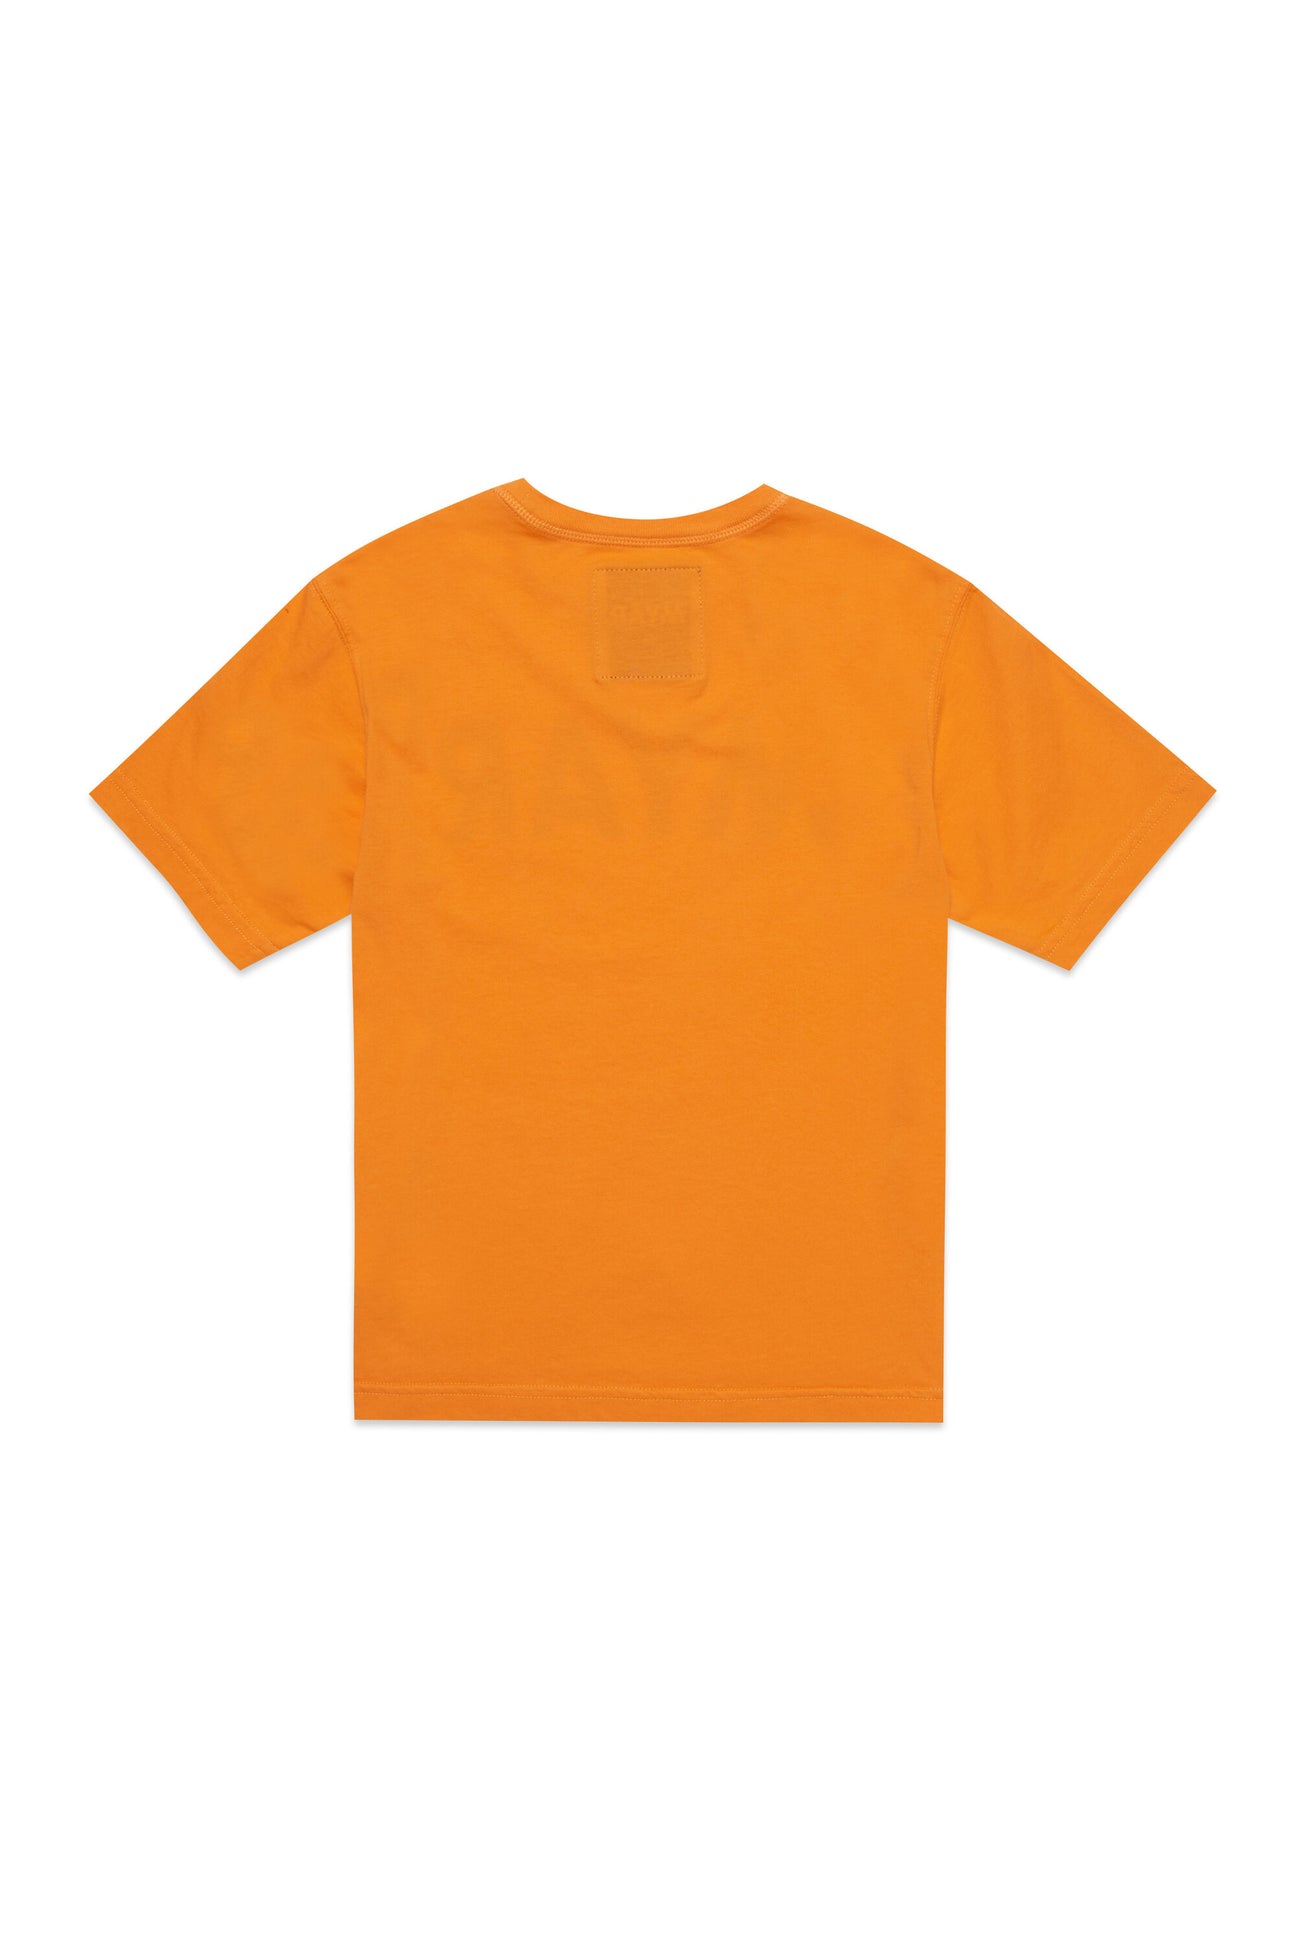 Crew-neck T-shirt in deadstock orange fabric with logo on the front Crew-neck T-shirt in deadstock orange fabric with logo on the front